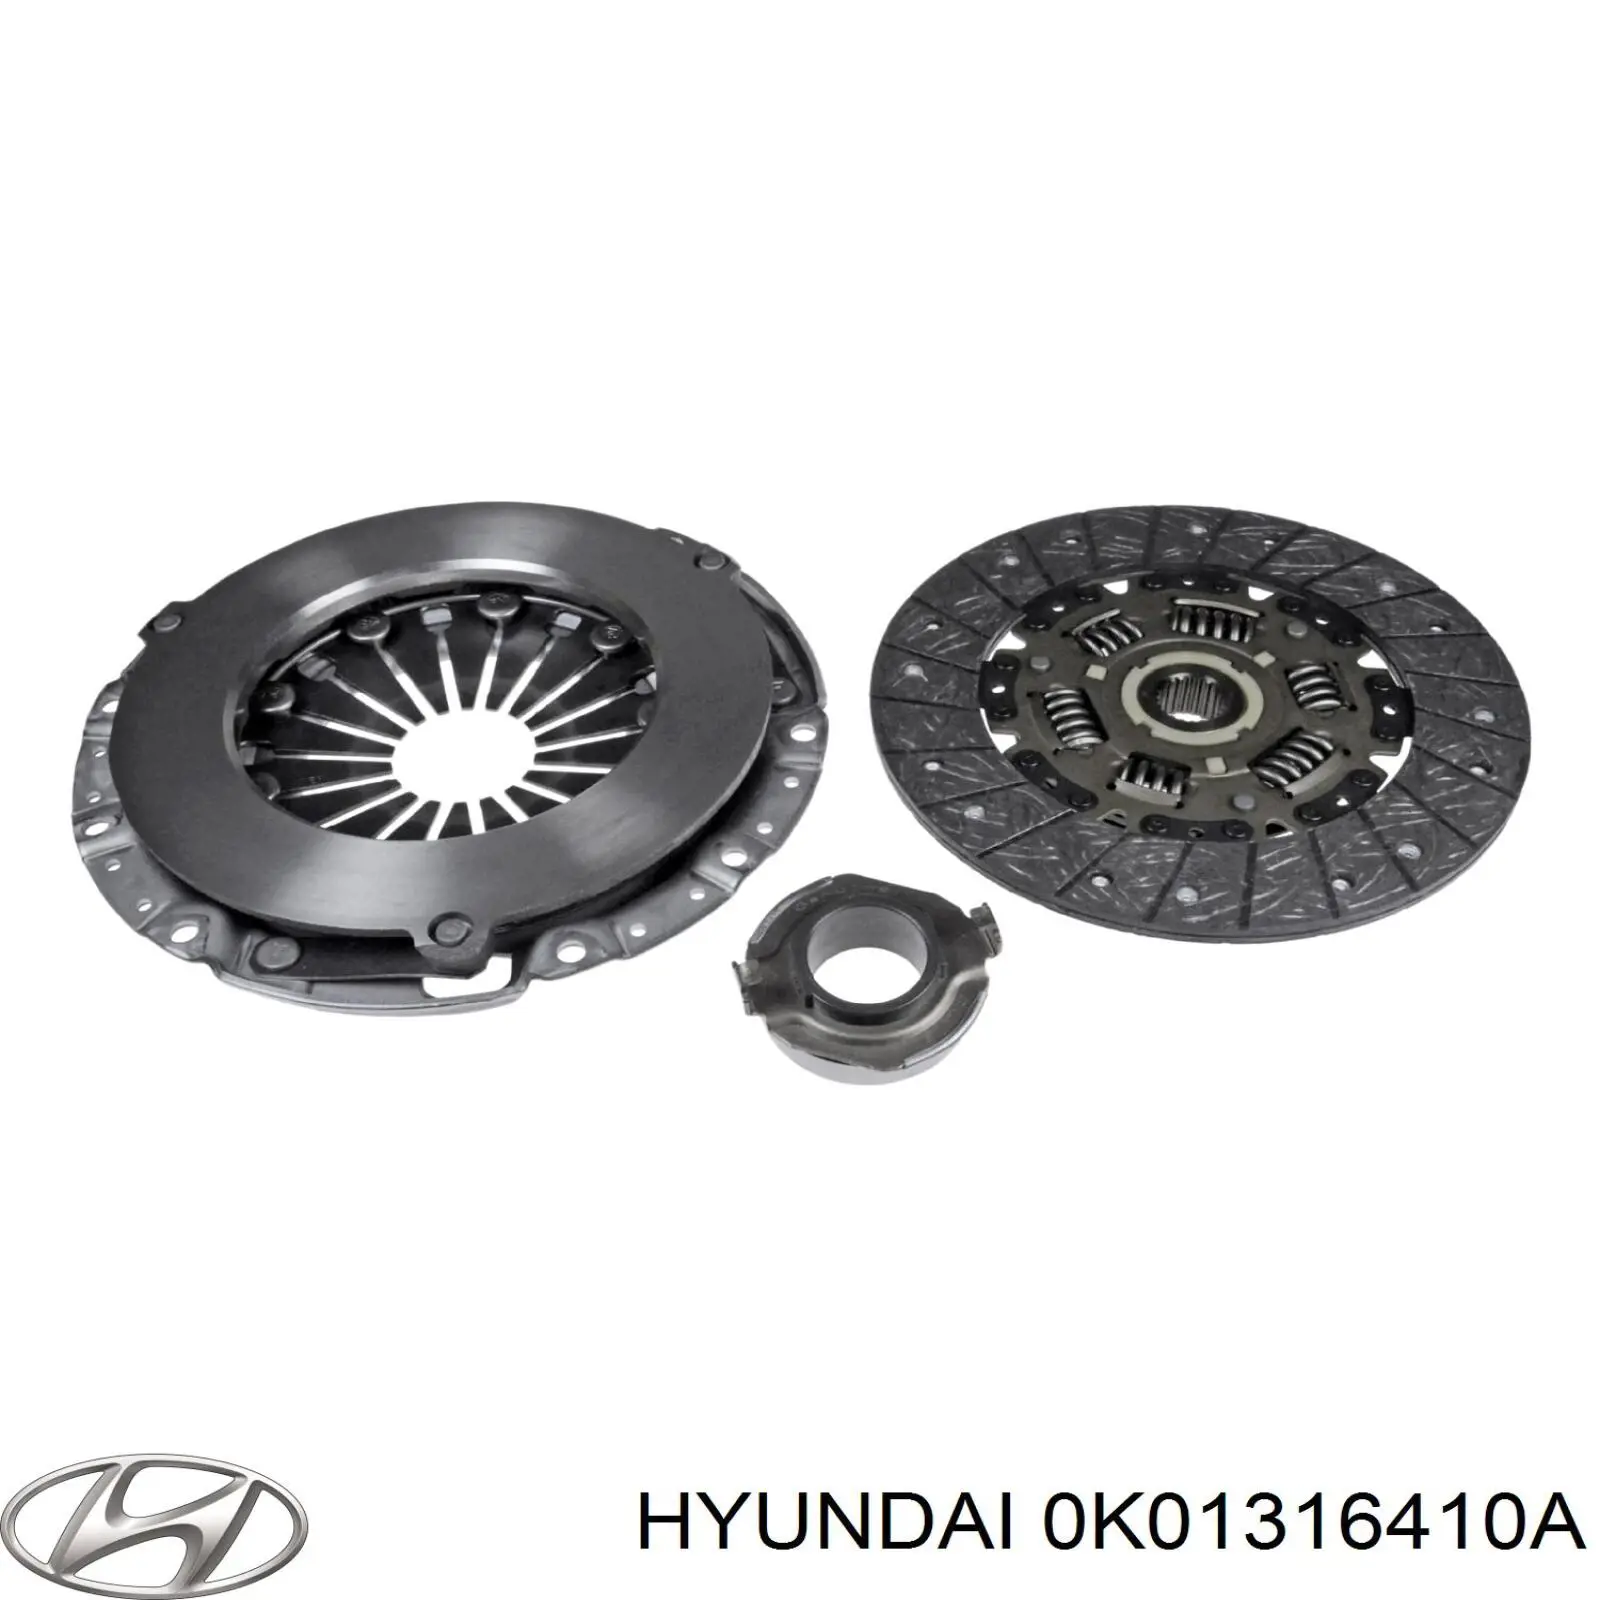 0K01316410A Hyundai/Kia plato de presión del embrague